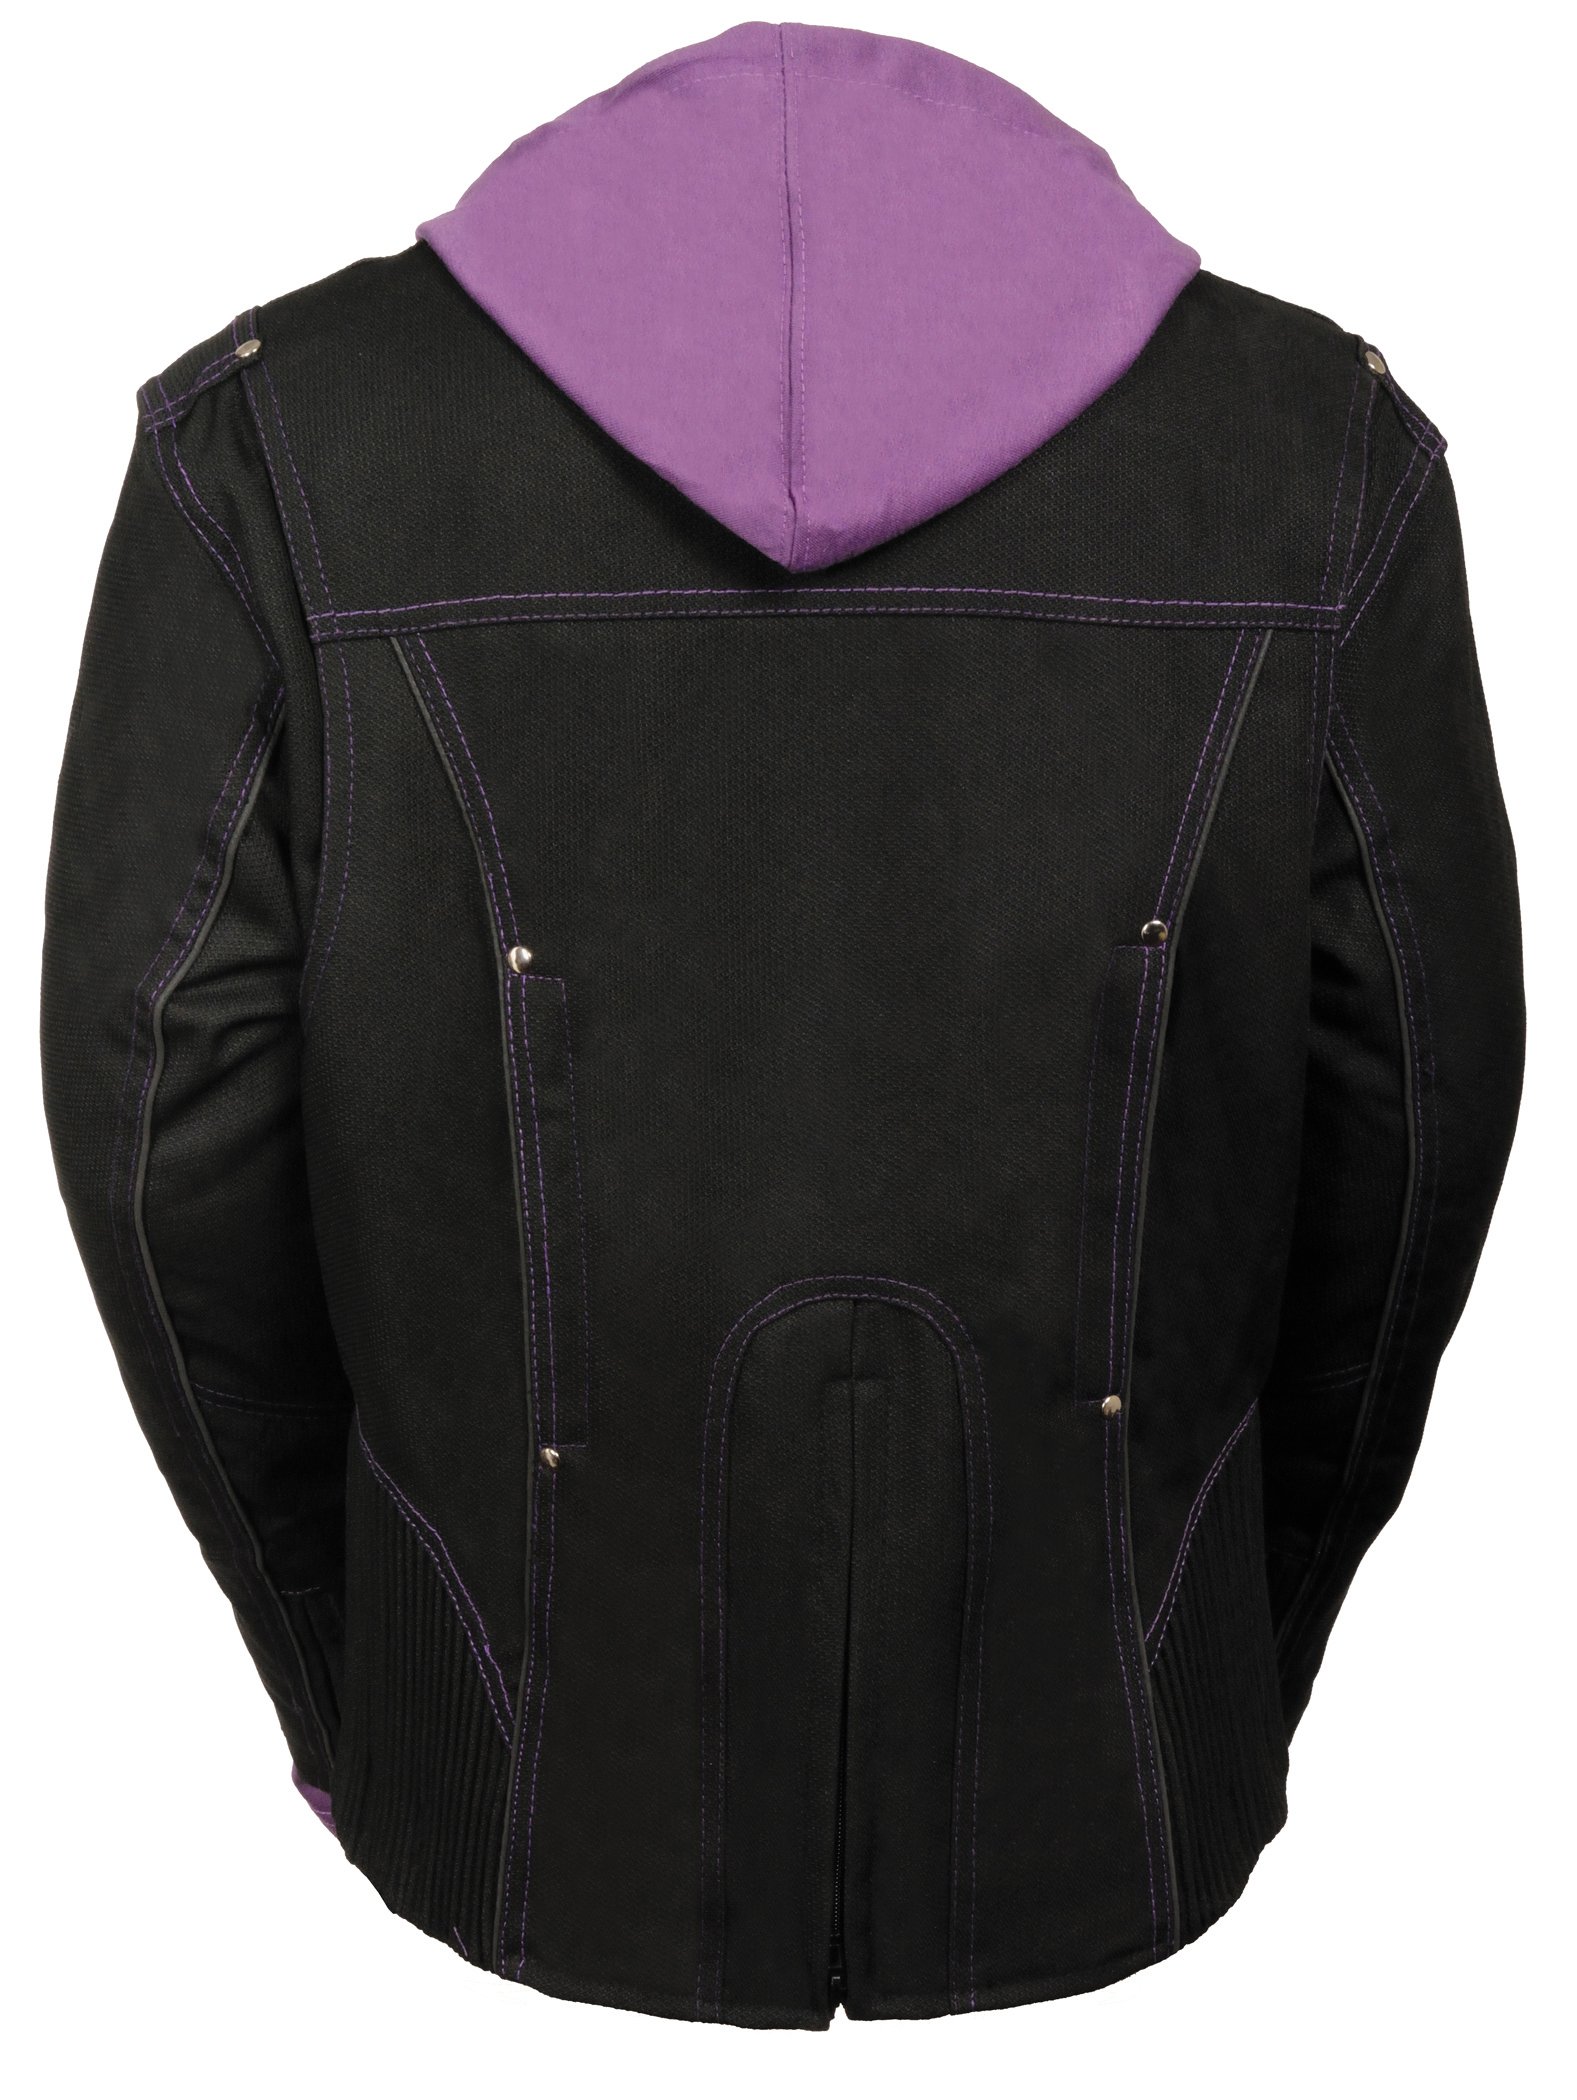 Nexgen Women S Doulon 1300 Nylon Twill Fleece Jacket Black Purple Small